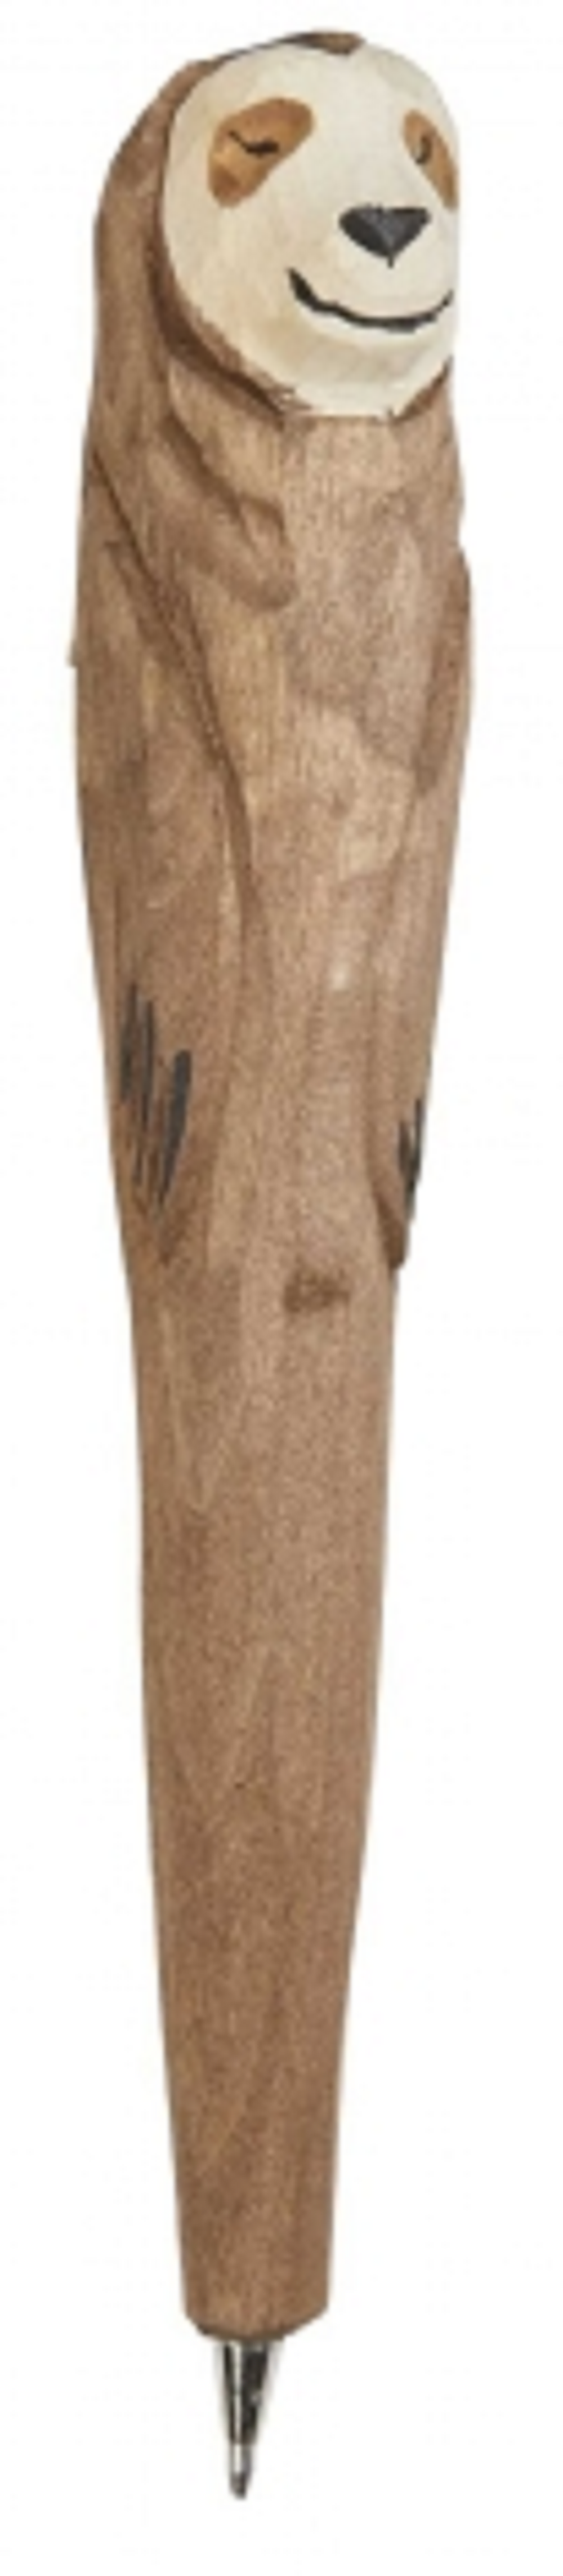 Ravensden Wooden Sloth Pen